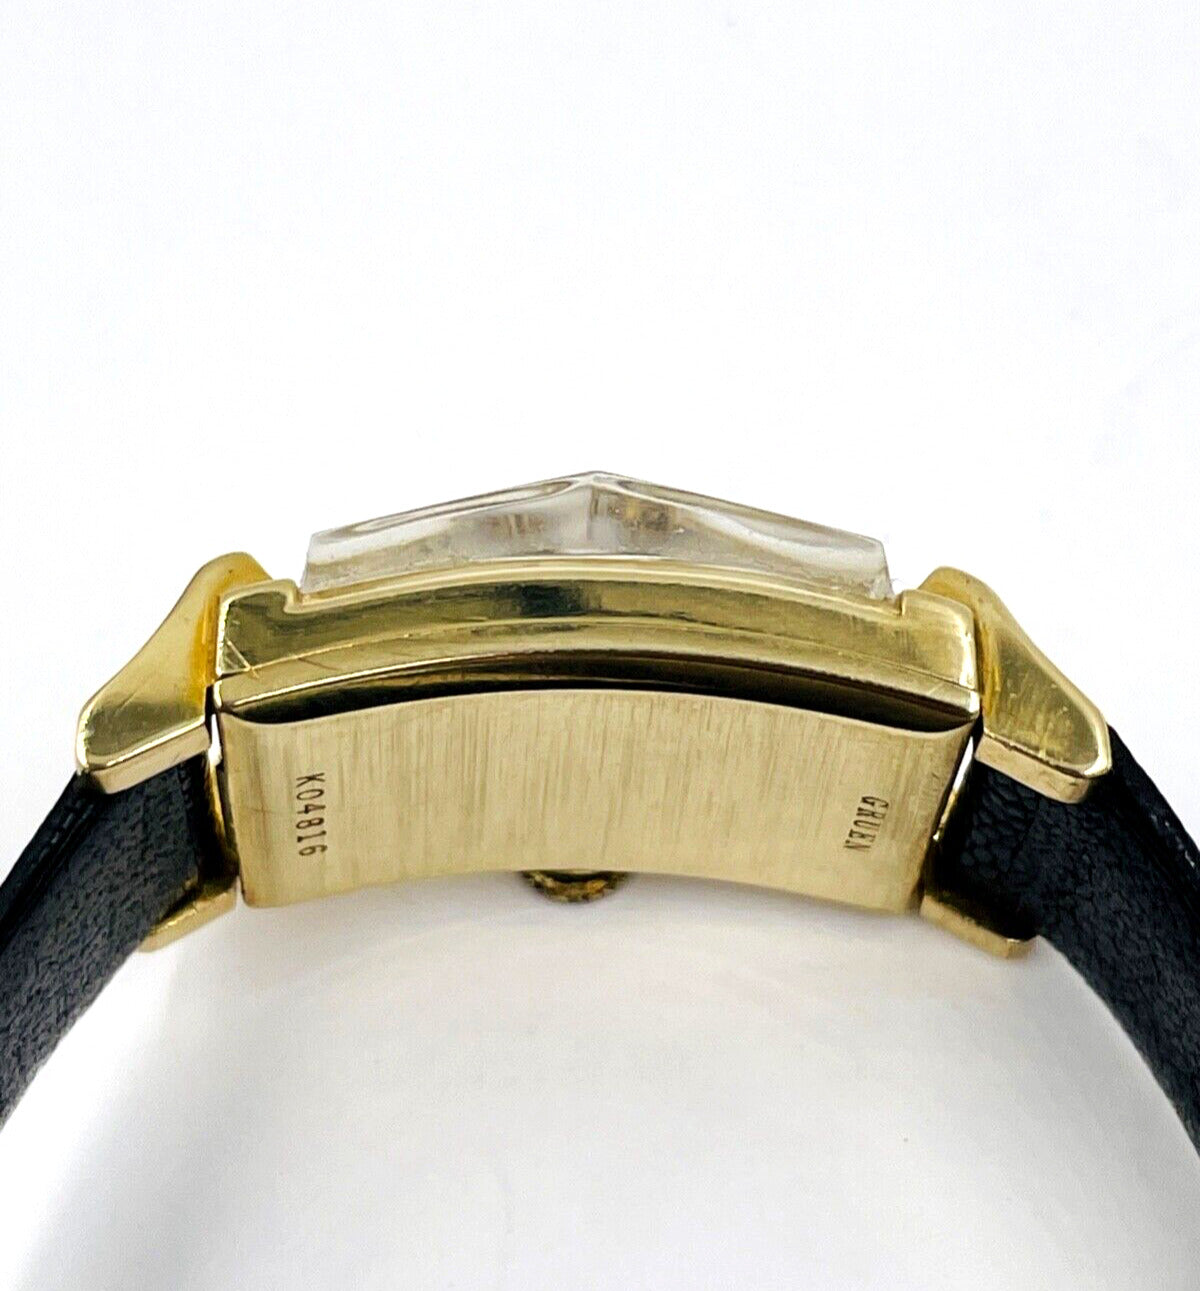 Gruen Curvex Precision, 14K Yellow Gold, Black Dial, Arabic Numeral Fancy Lugs